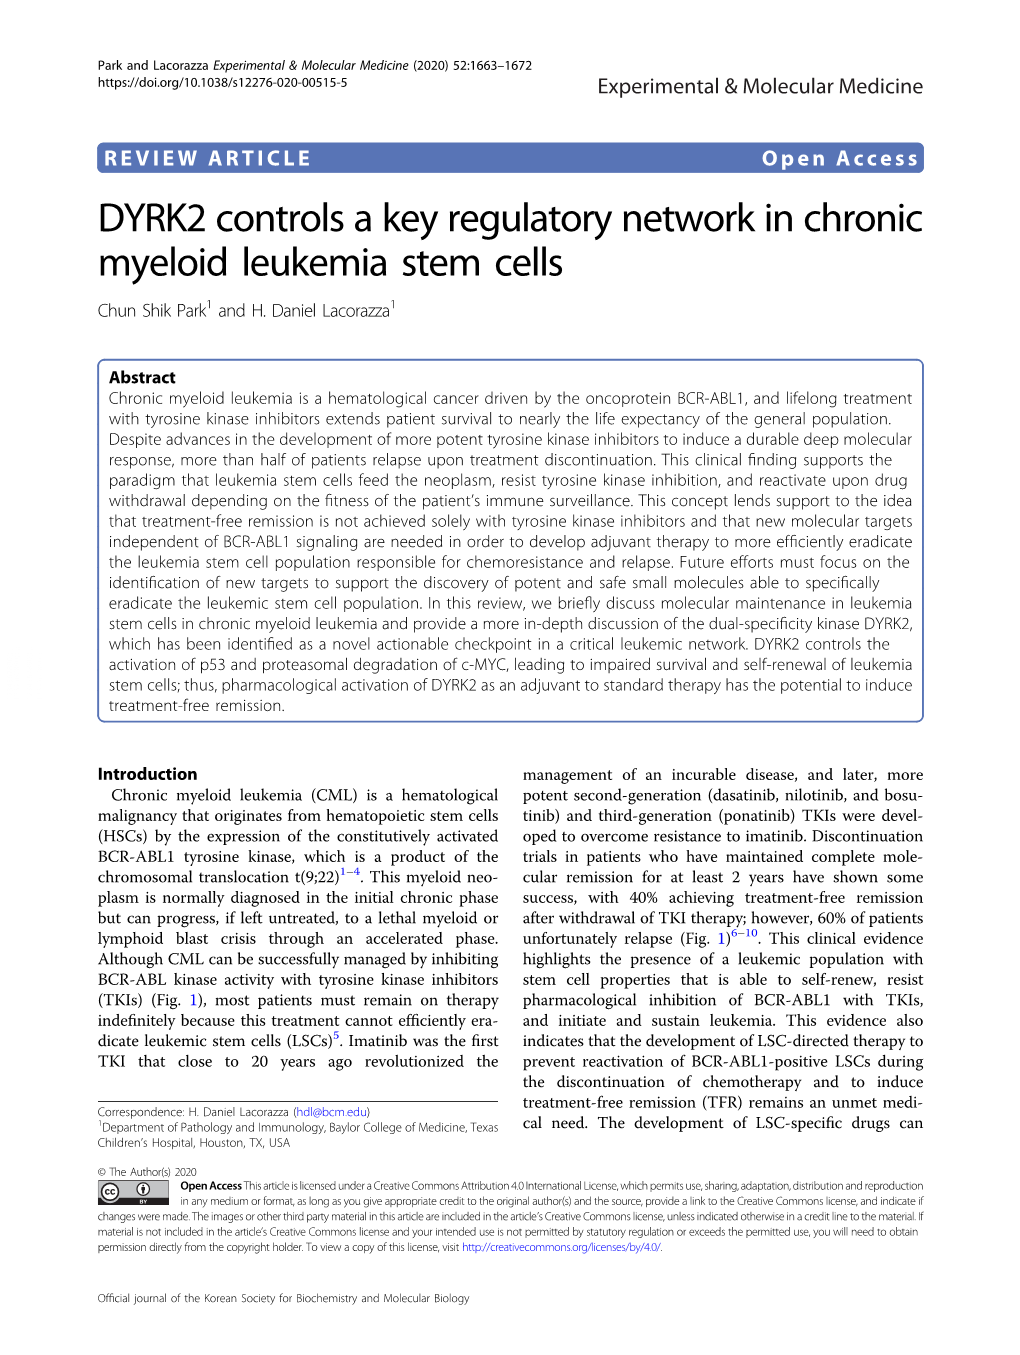 DYRK2 Controls a Key Regulatory Network in Chronic Myeloid Leukemia Stem Cells Chun Shik Park1 and H